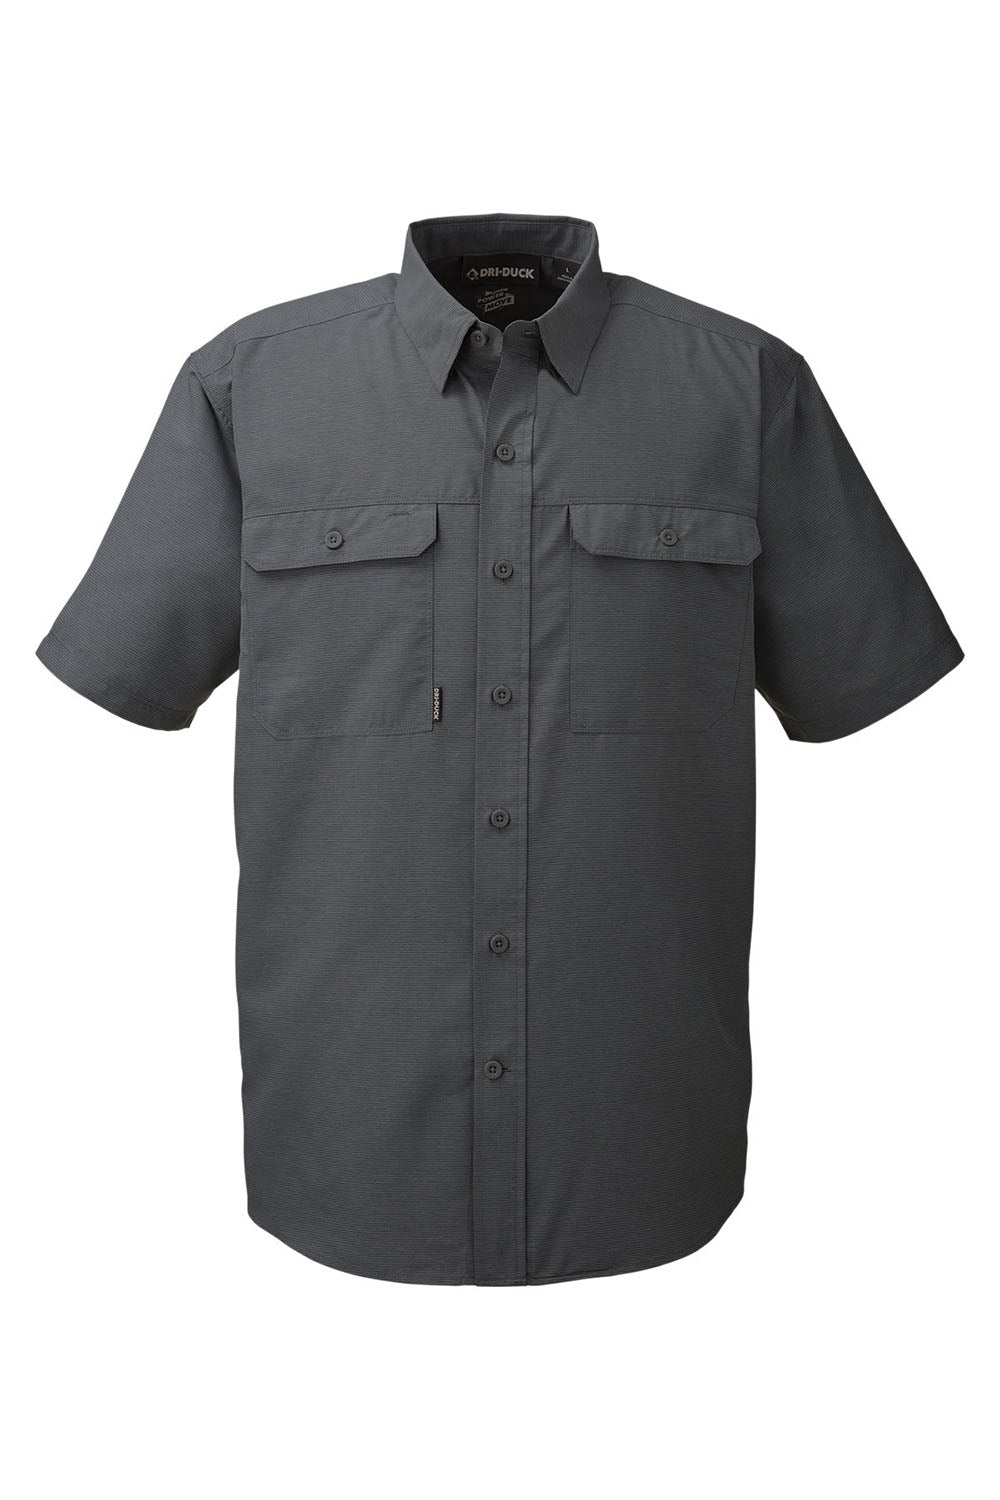 Dri Duck 4445DD Mens Crossroad Short Sleeve Button Down Shirt w/ Double Pockets Charcoal Grey Flat Front